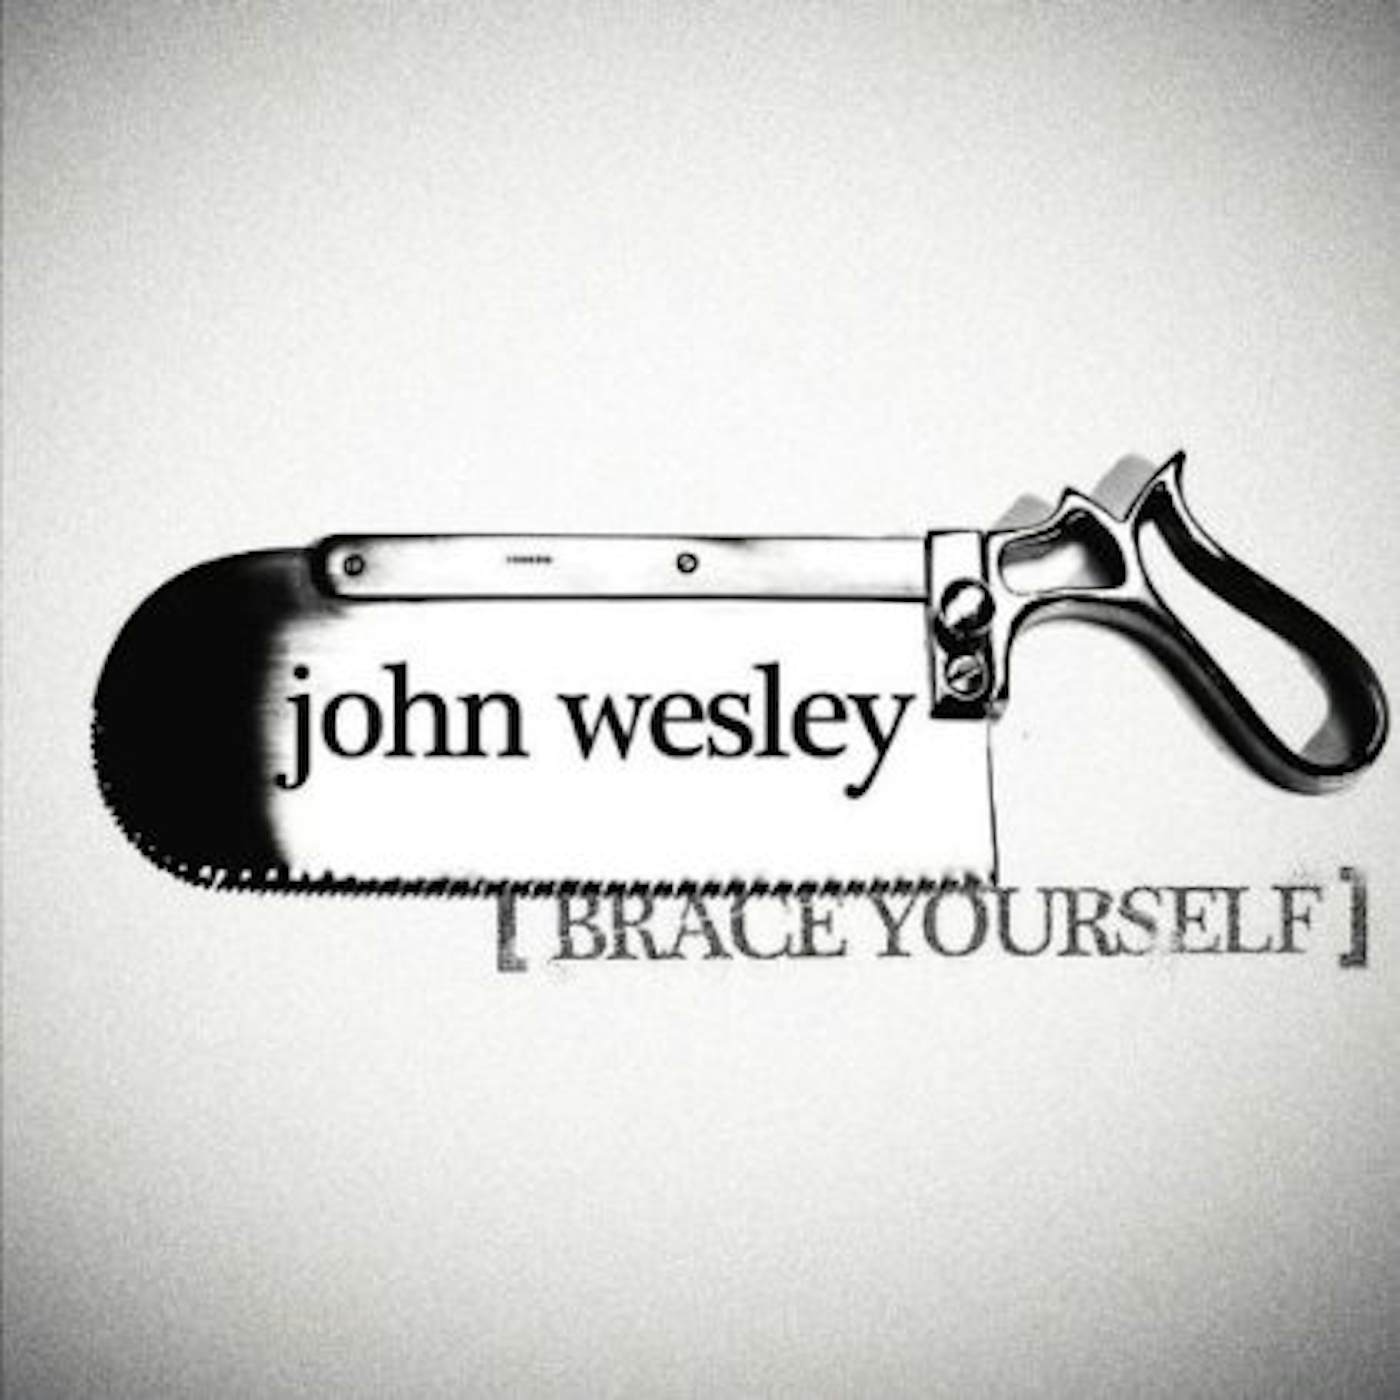 John Wesley BRACE YOURSELF CD